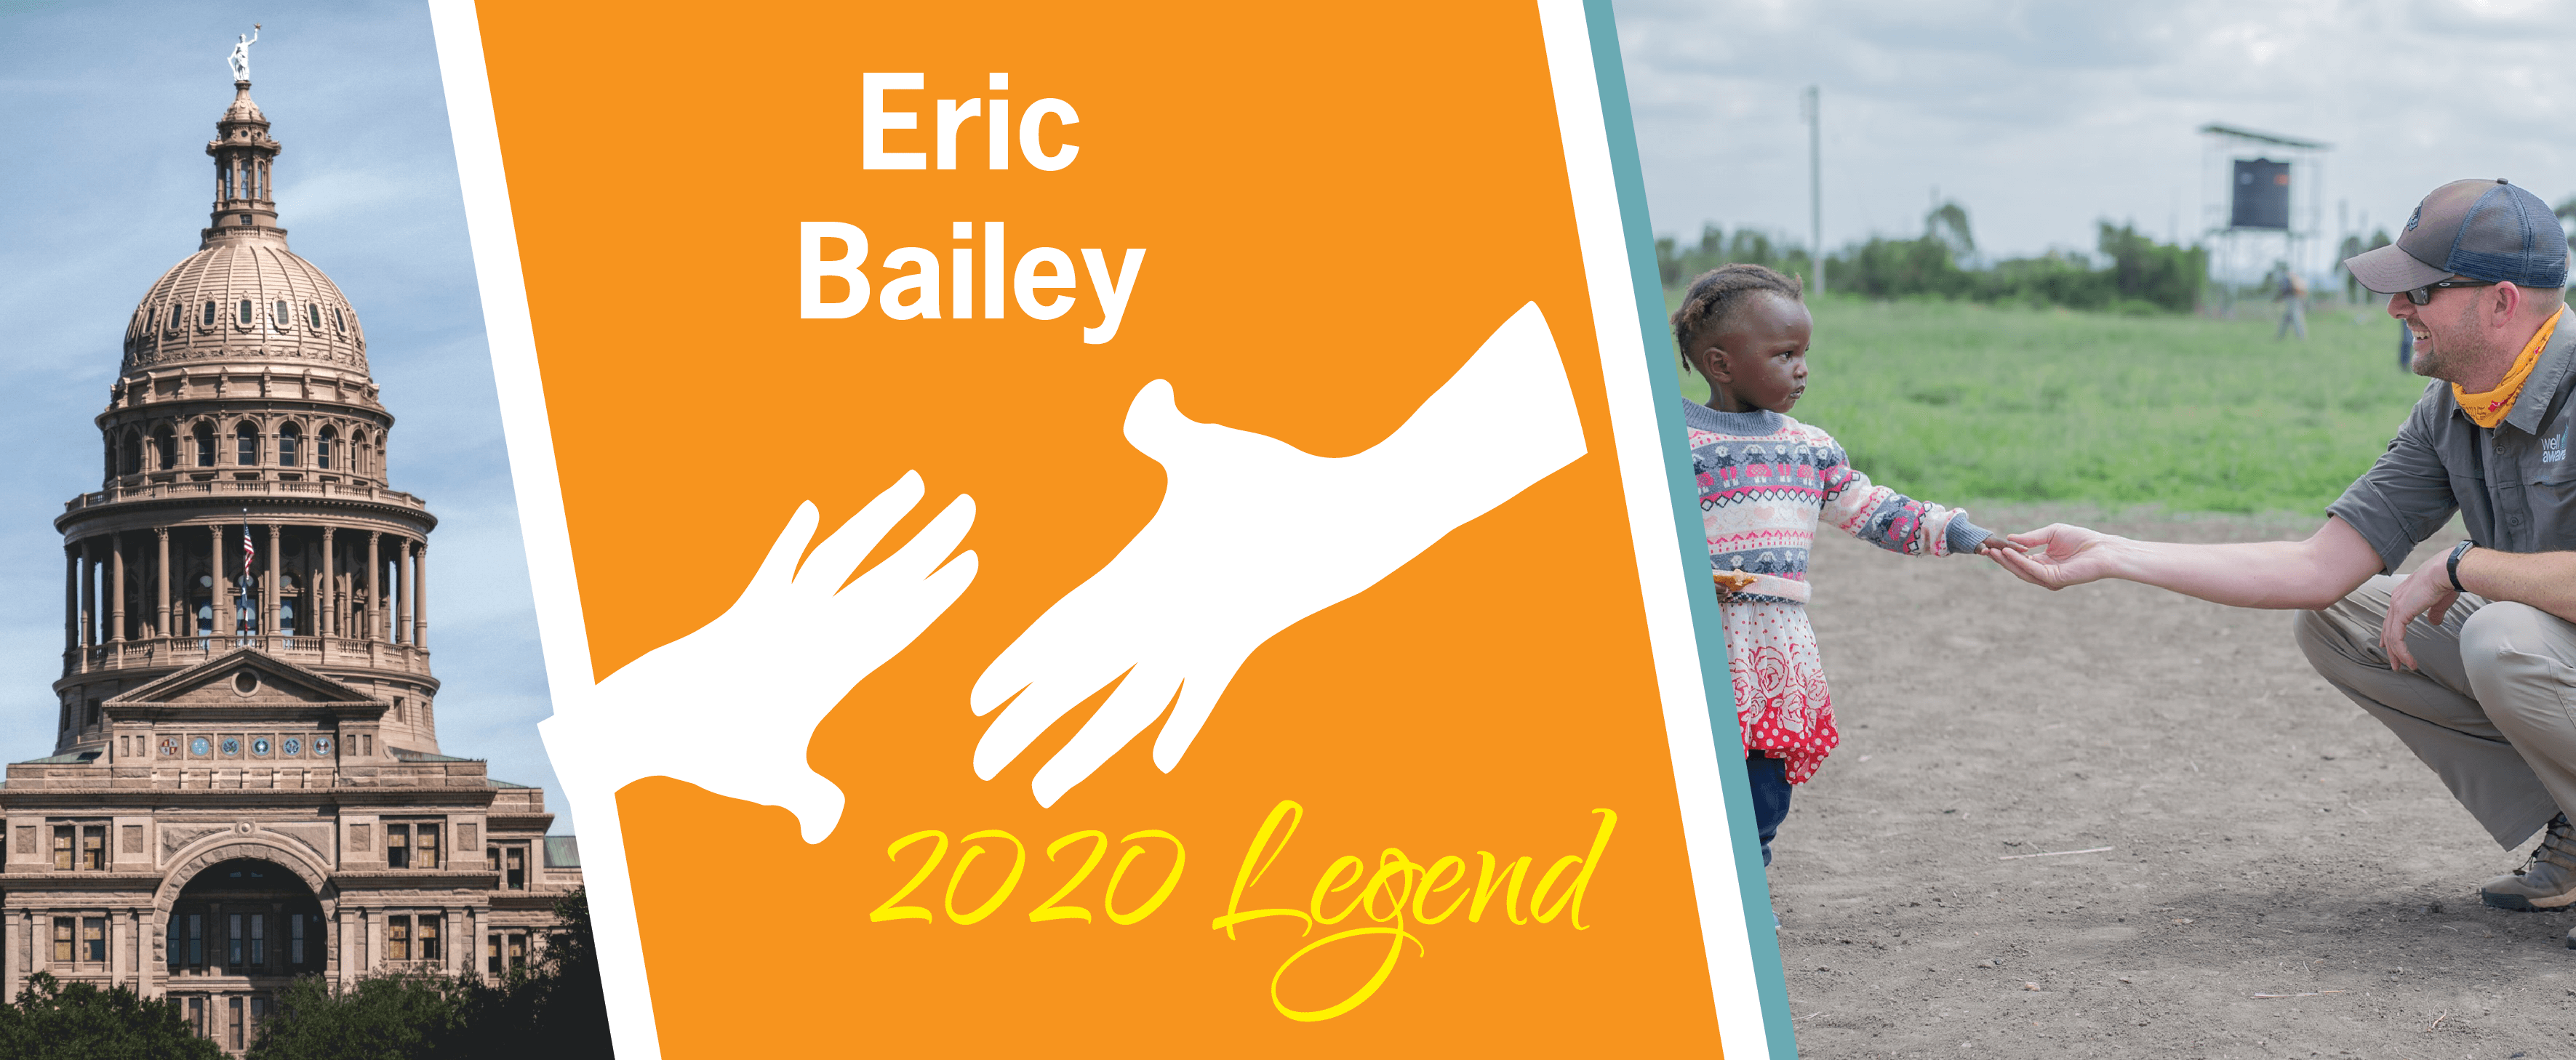 Eric Bailey Legend